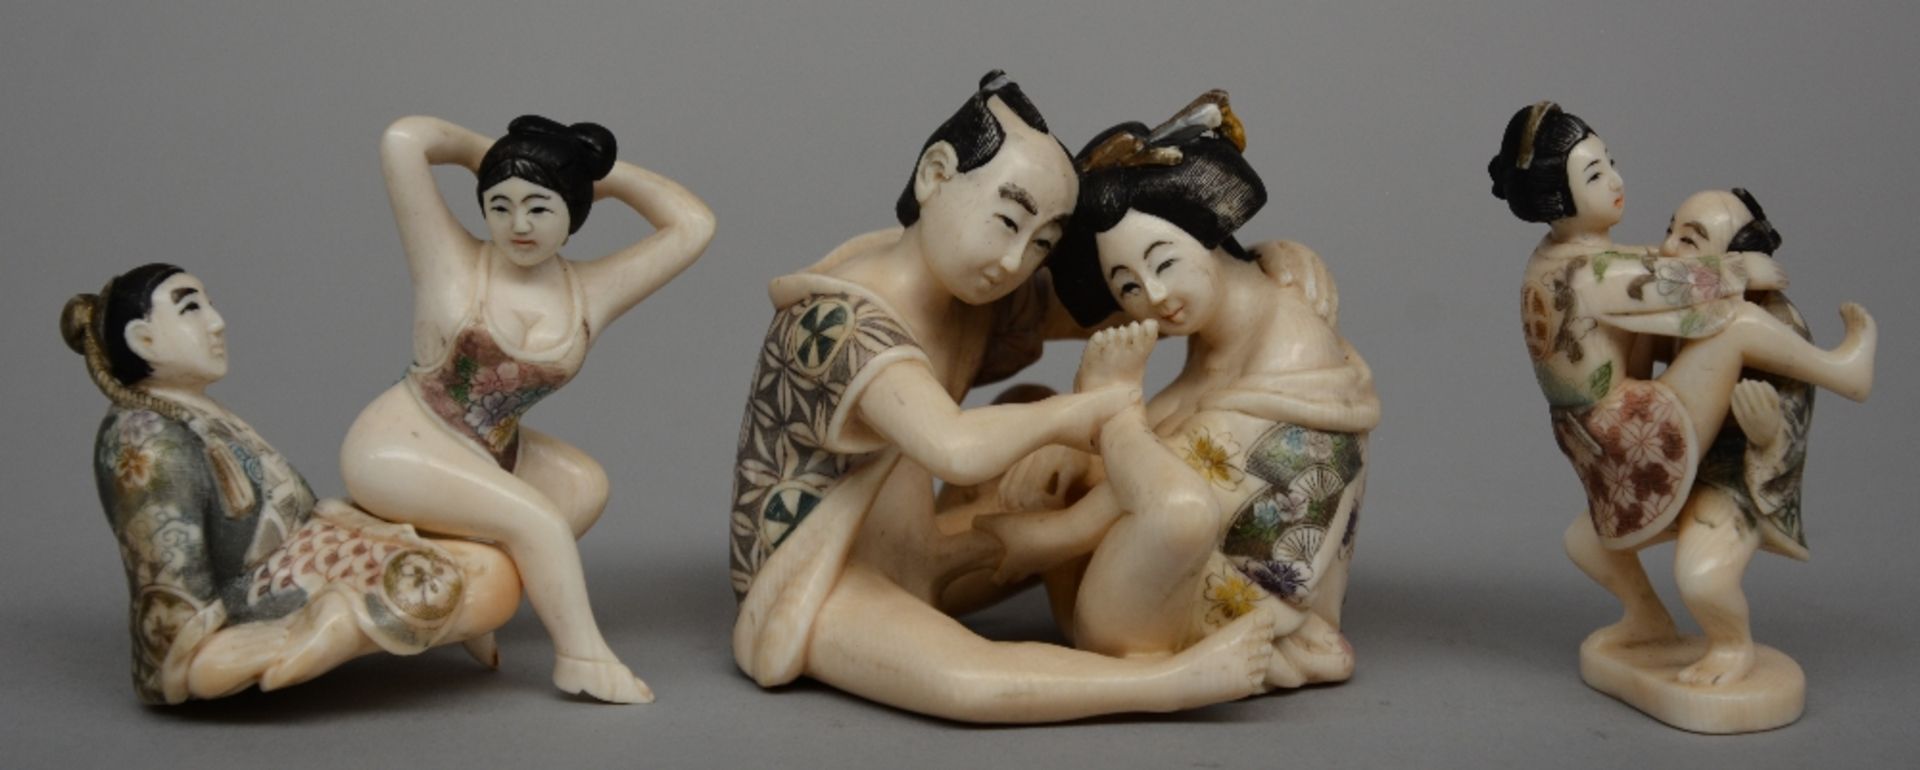 Five ivory erotic sculptures, Japanese style, scrimshaw decorated, first half of 20thC, H 3 - 7 - Bild 2 aus 10